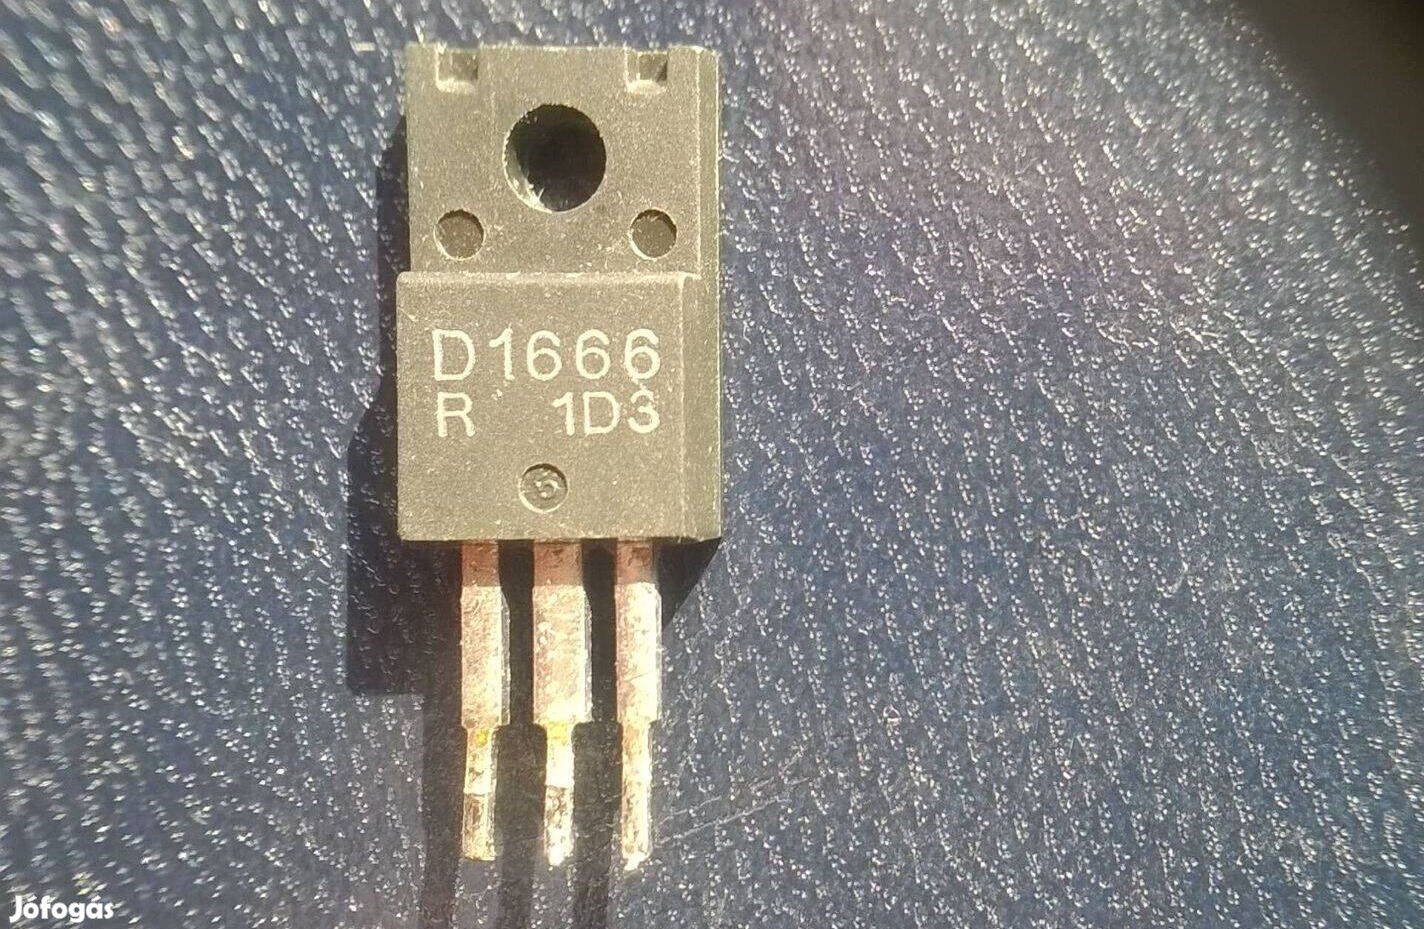 2SD 1666 N tranzisztor , 60 V , 3 A , bontott